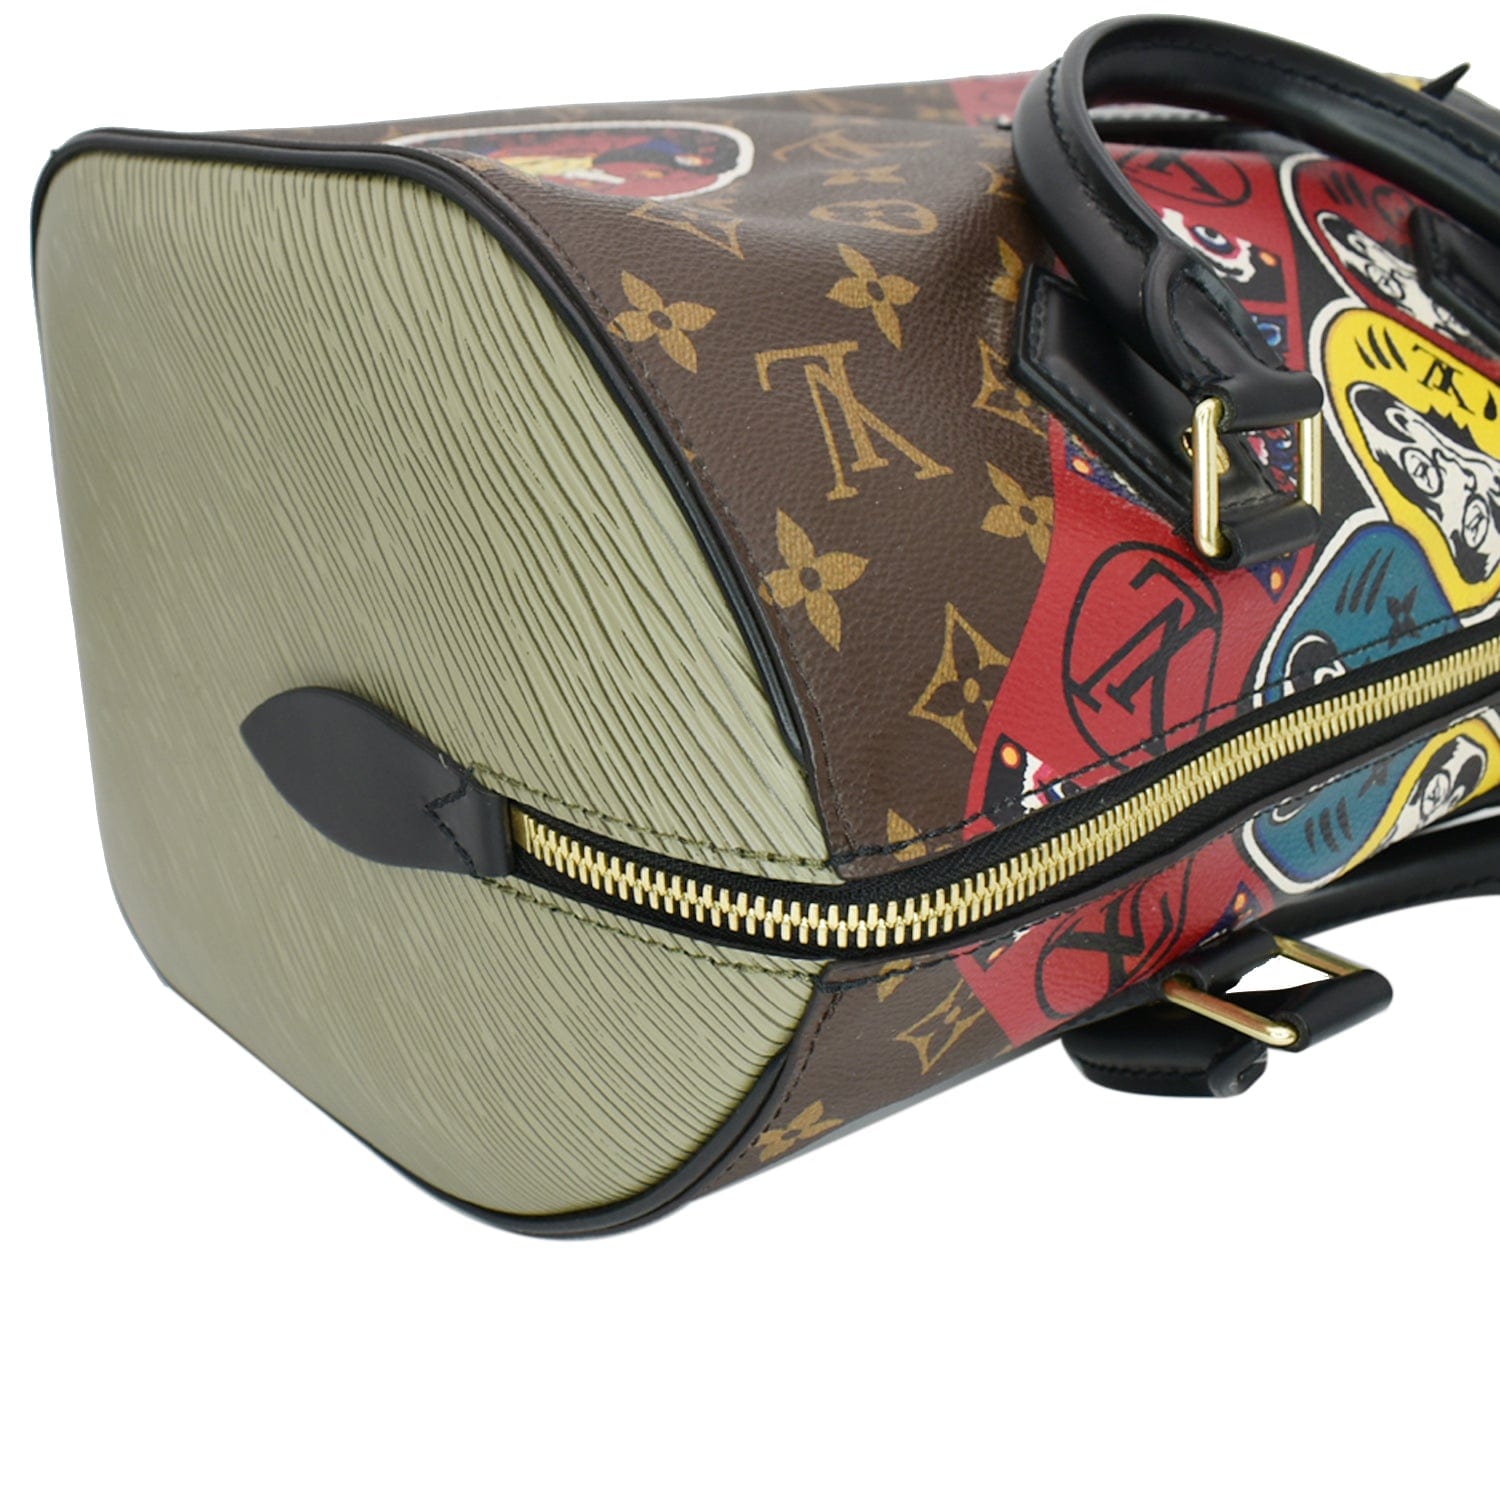 Louis Vuitton - Authenticated Kabuki Handbag - Leather Multicolour for Women, Very Good Condition